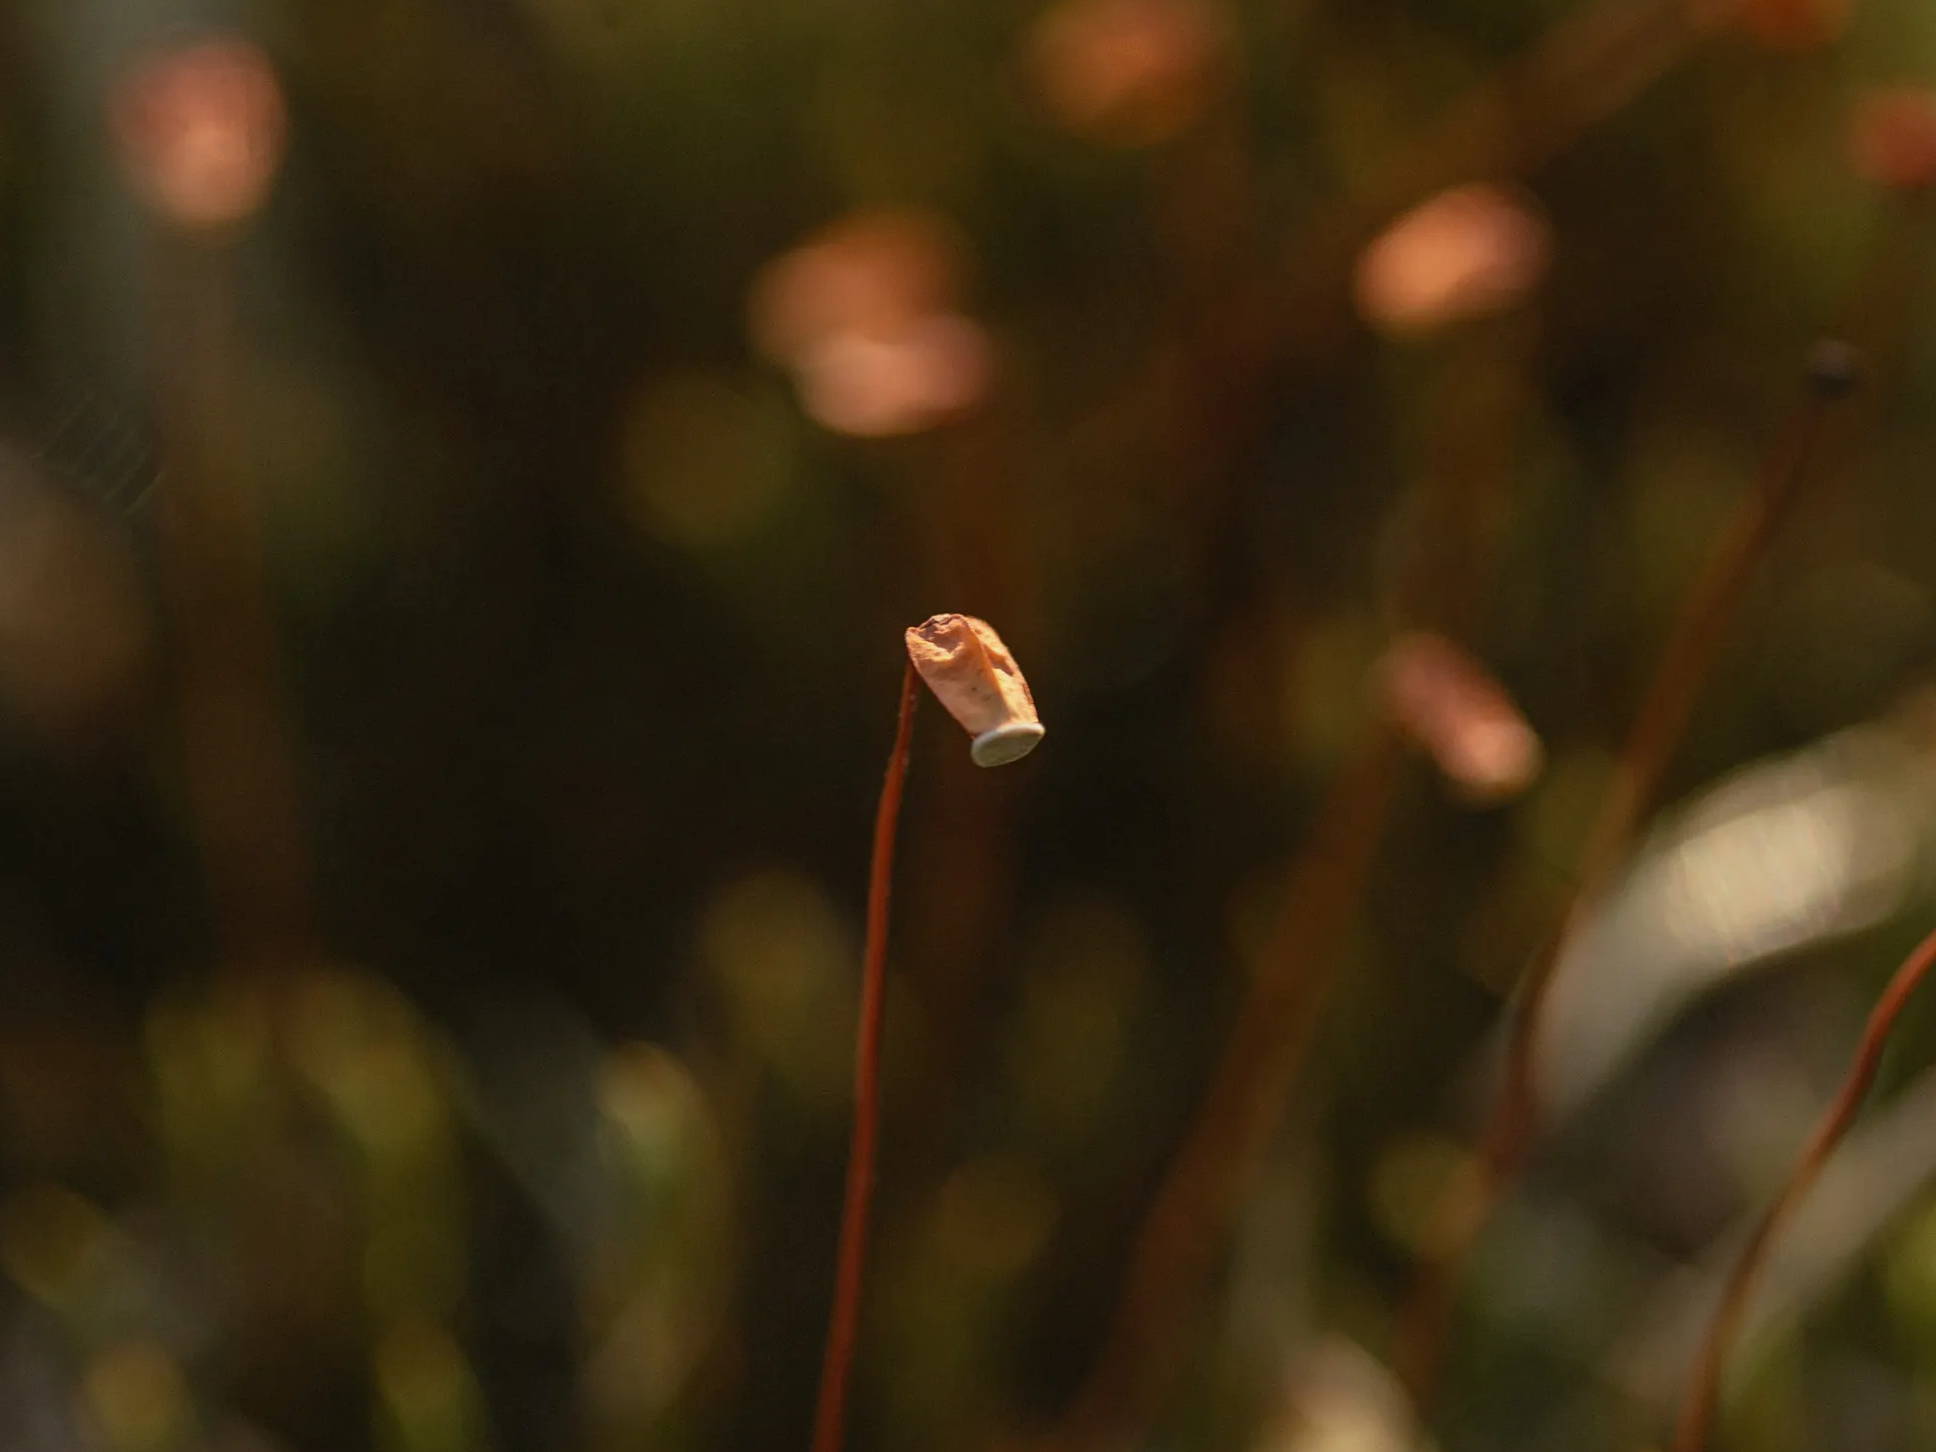 Closeup of a small flower bud